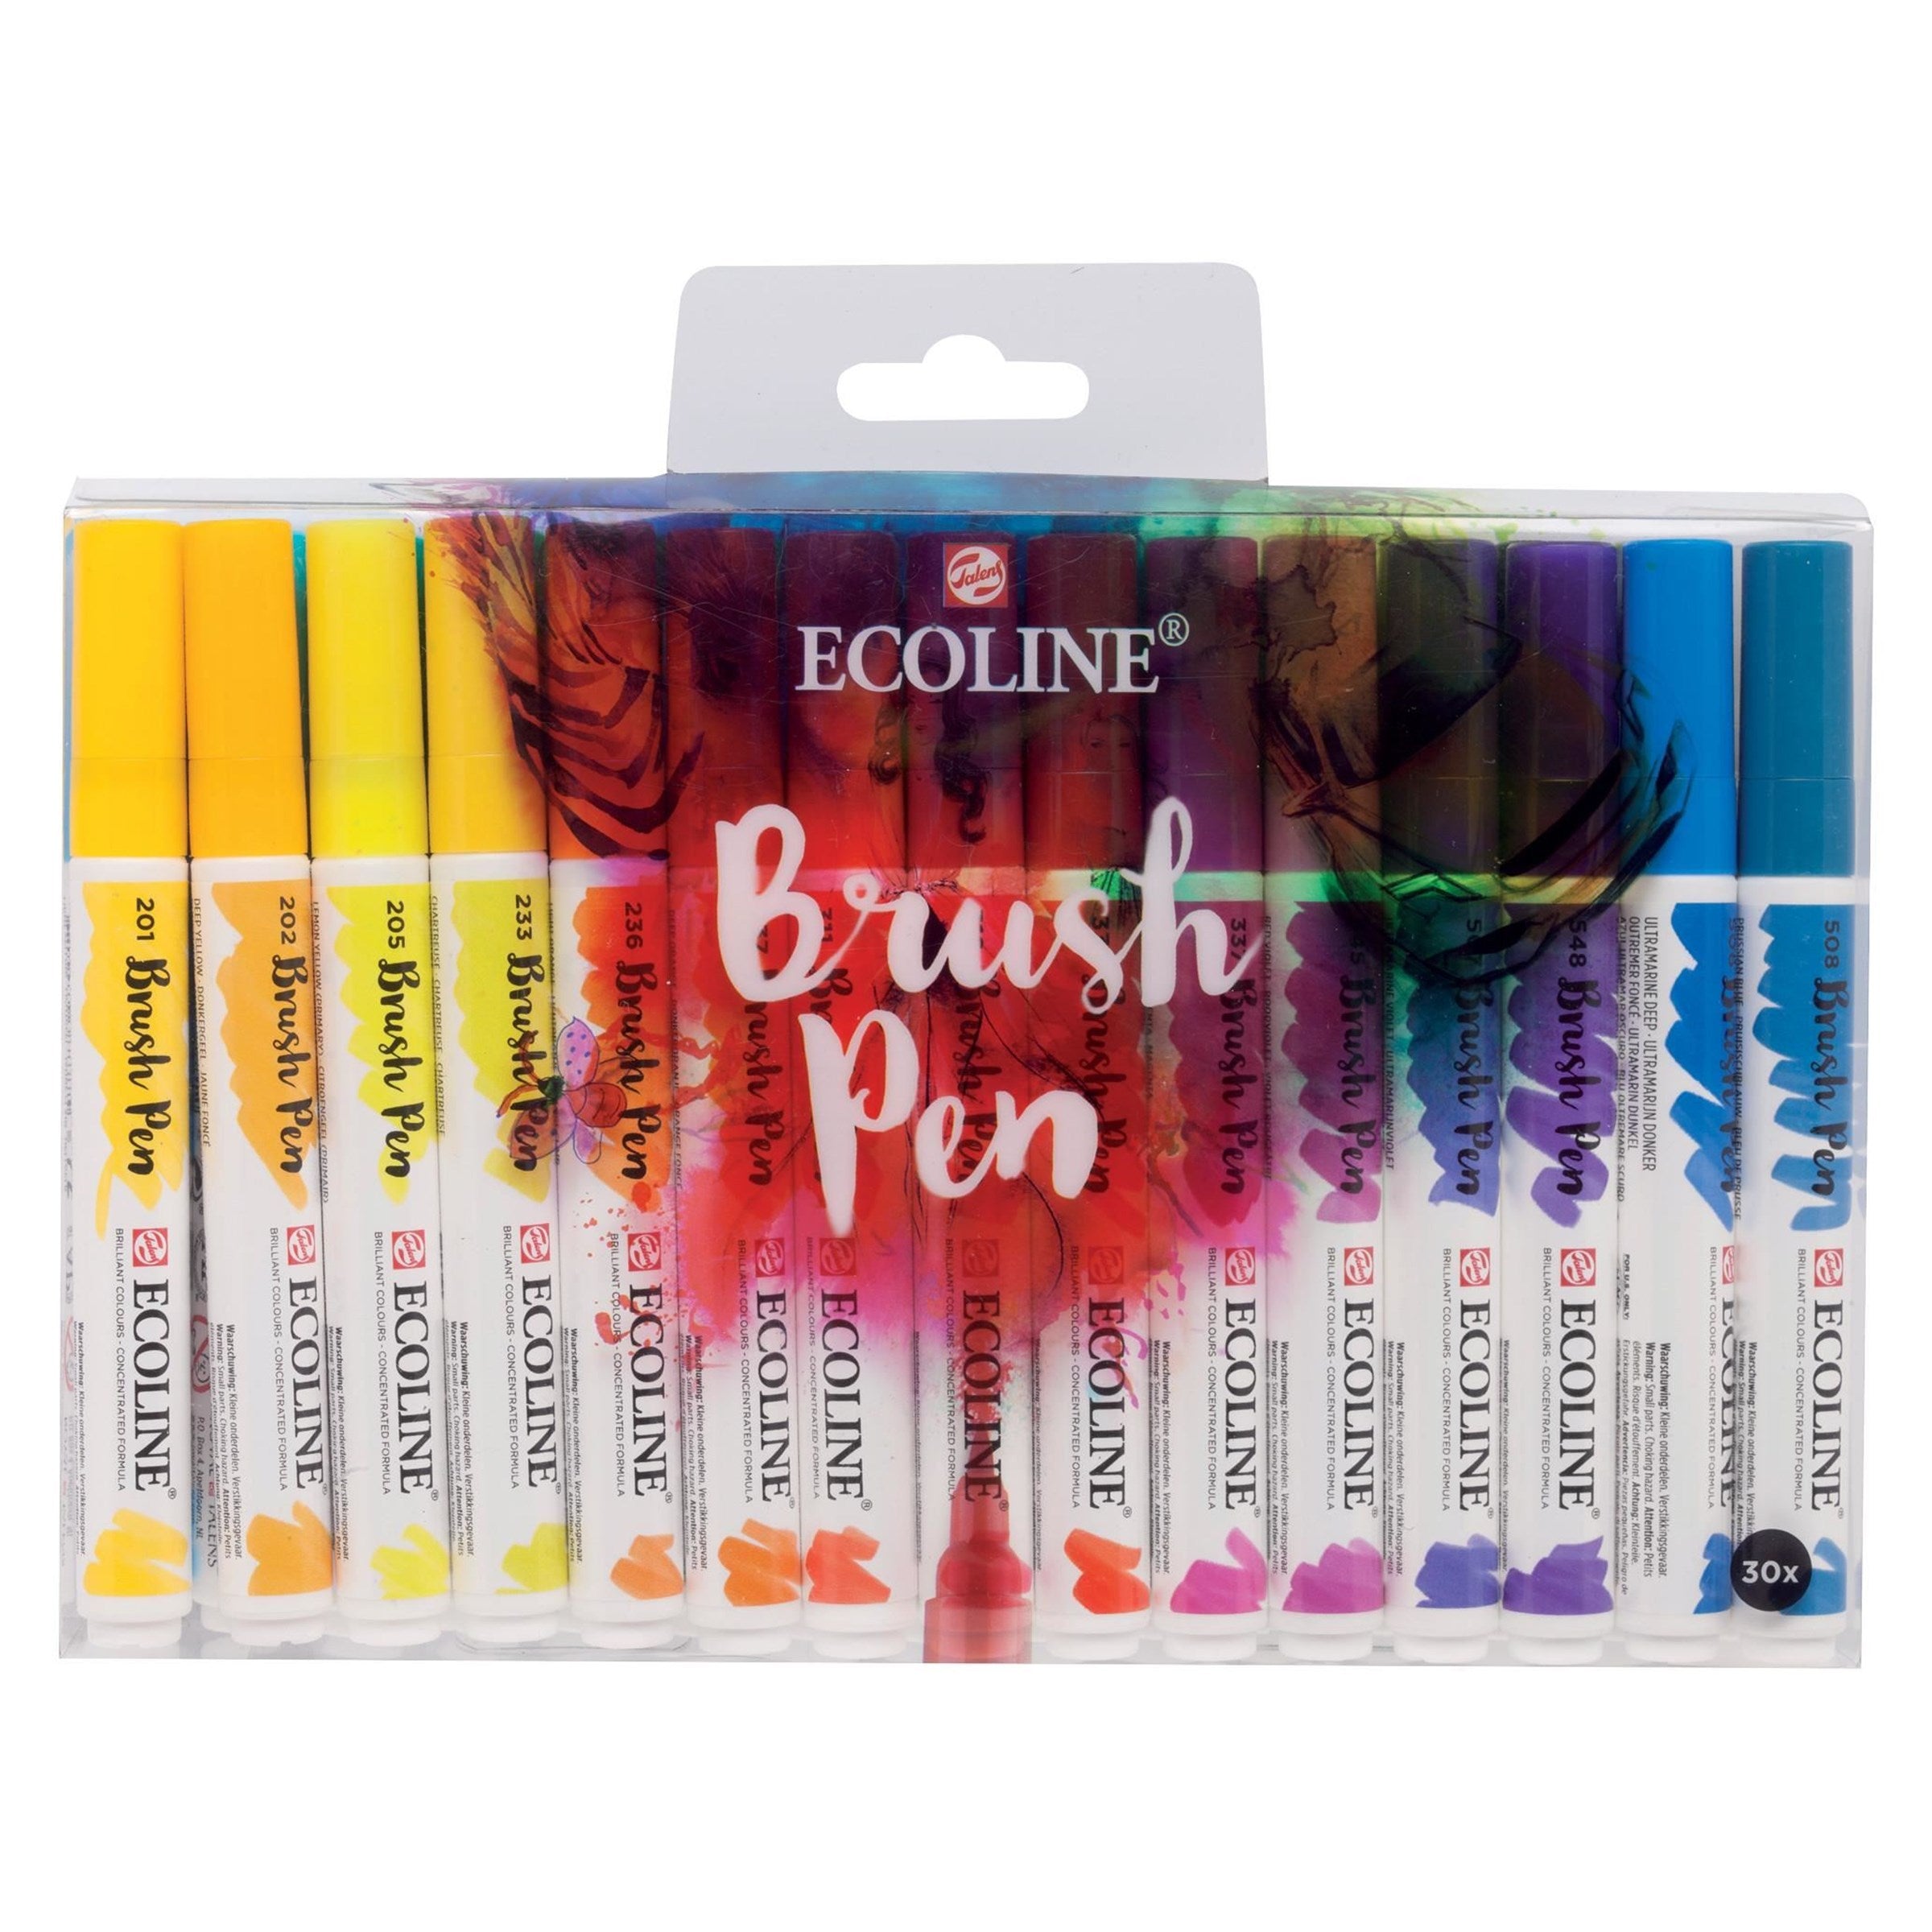 Ecocline Brush Pens set of 30-1